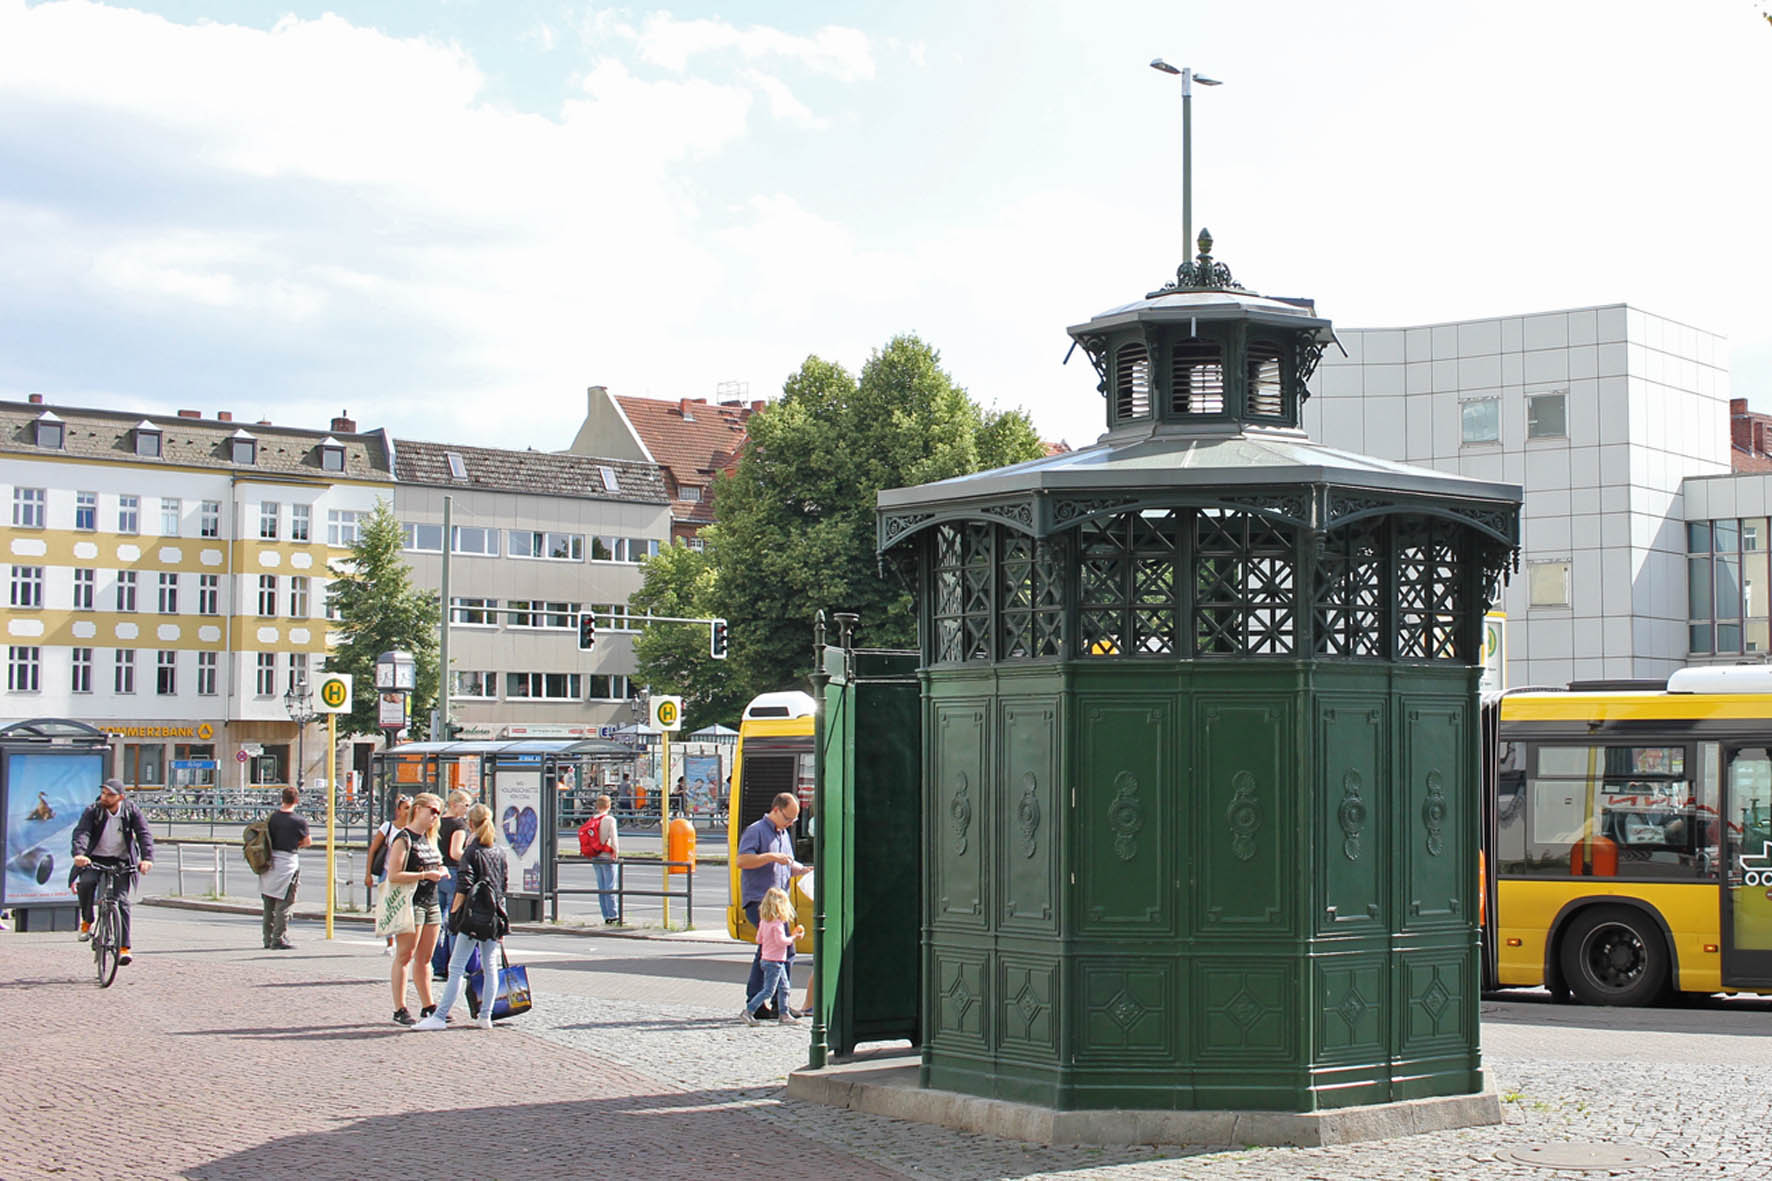 Café Achteck - Alt-Tegel - an example of Berlin's classic 19th century green cast iron public toilets